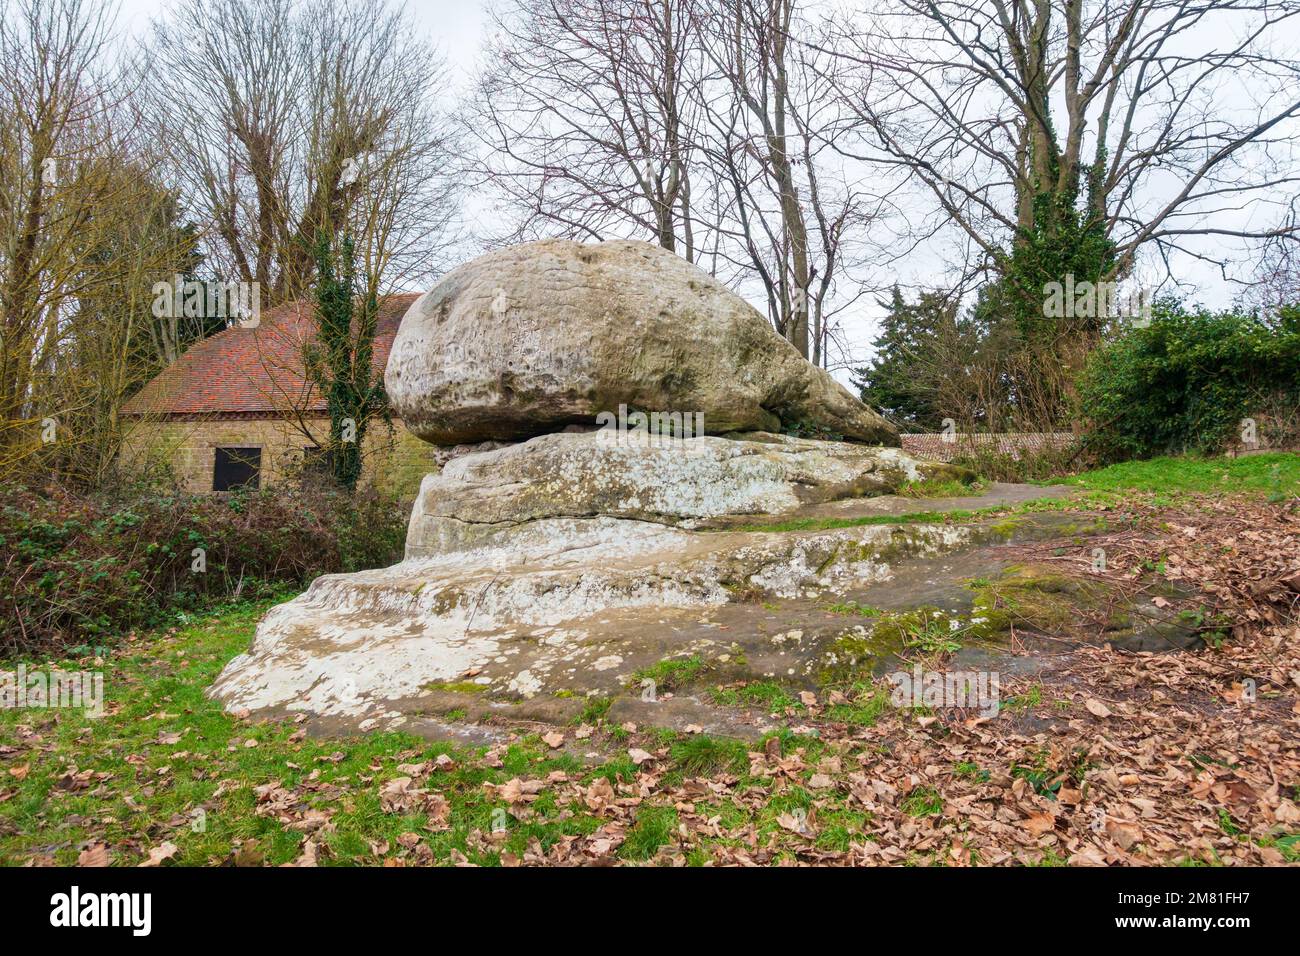 The Chiding Stone, a large sandstone rock formation, Chiddingstone village, kent, uk Stock Photo